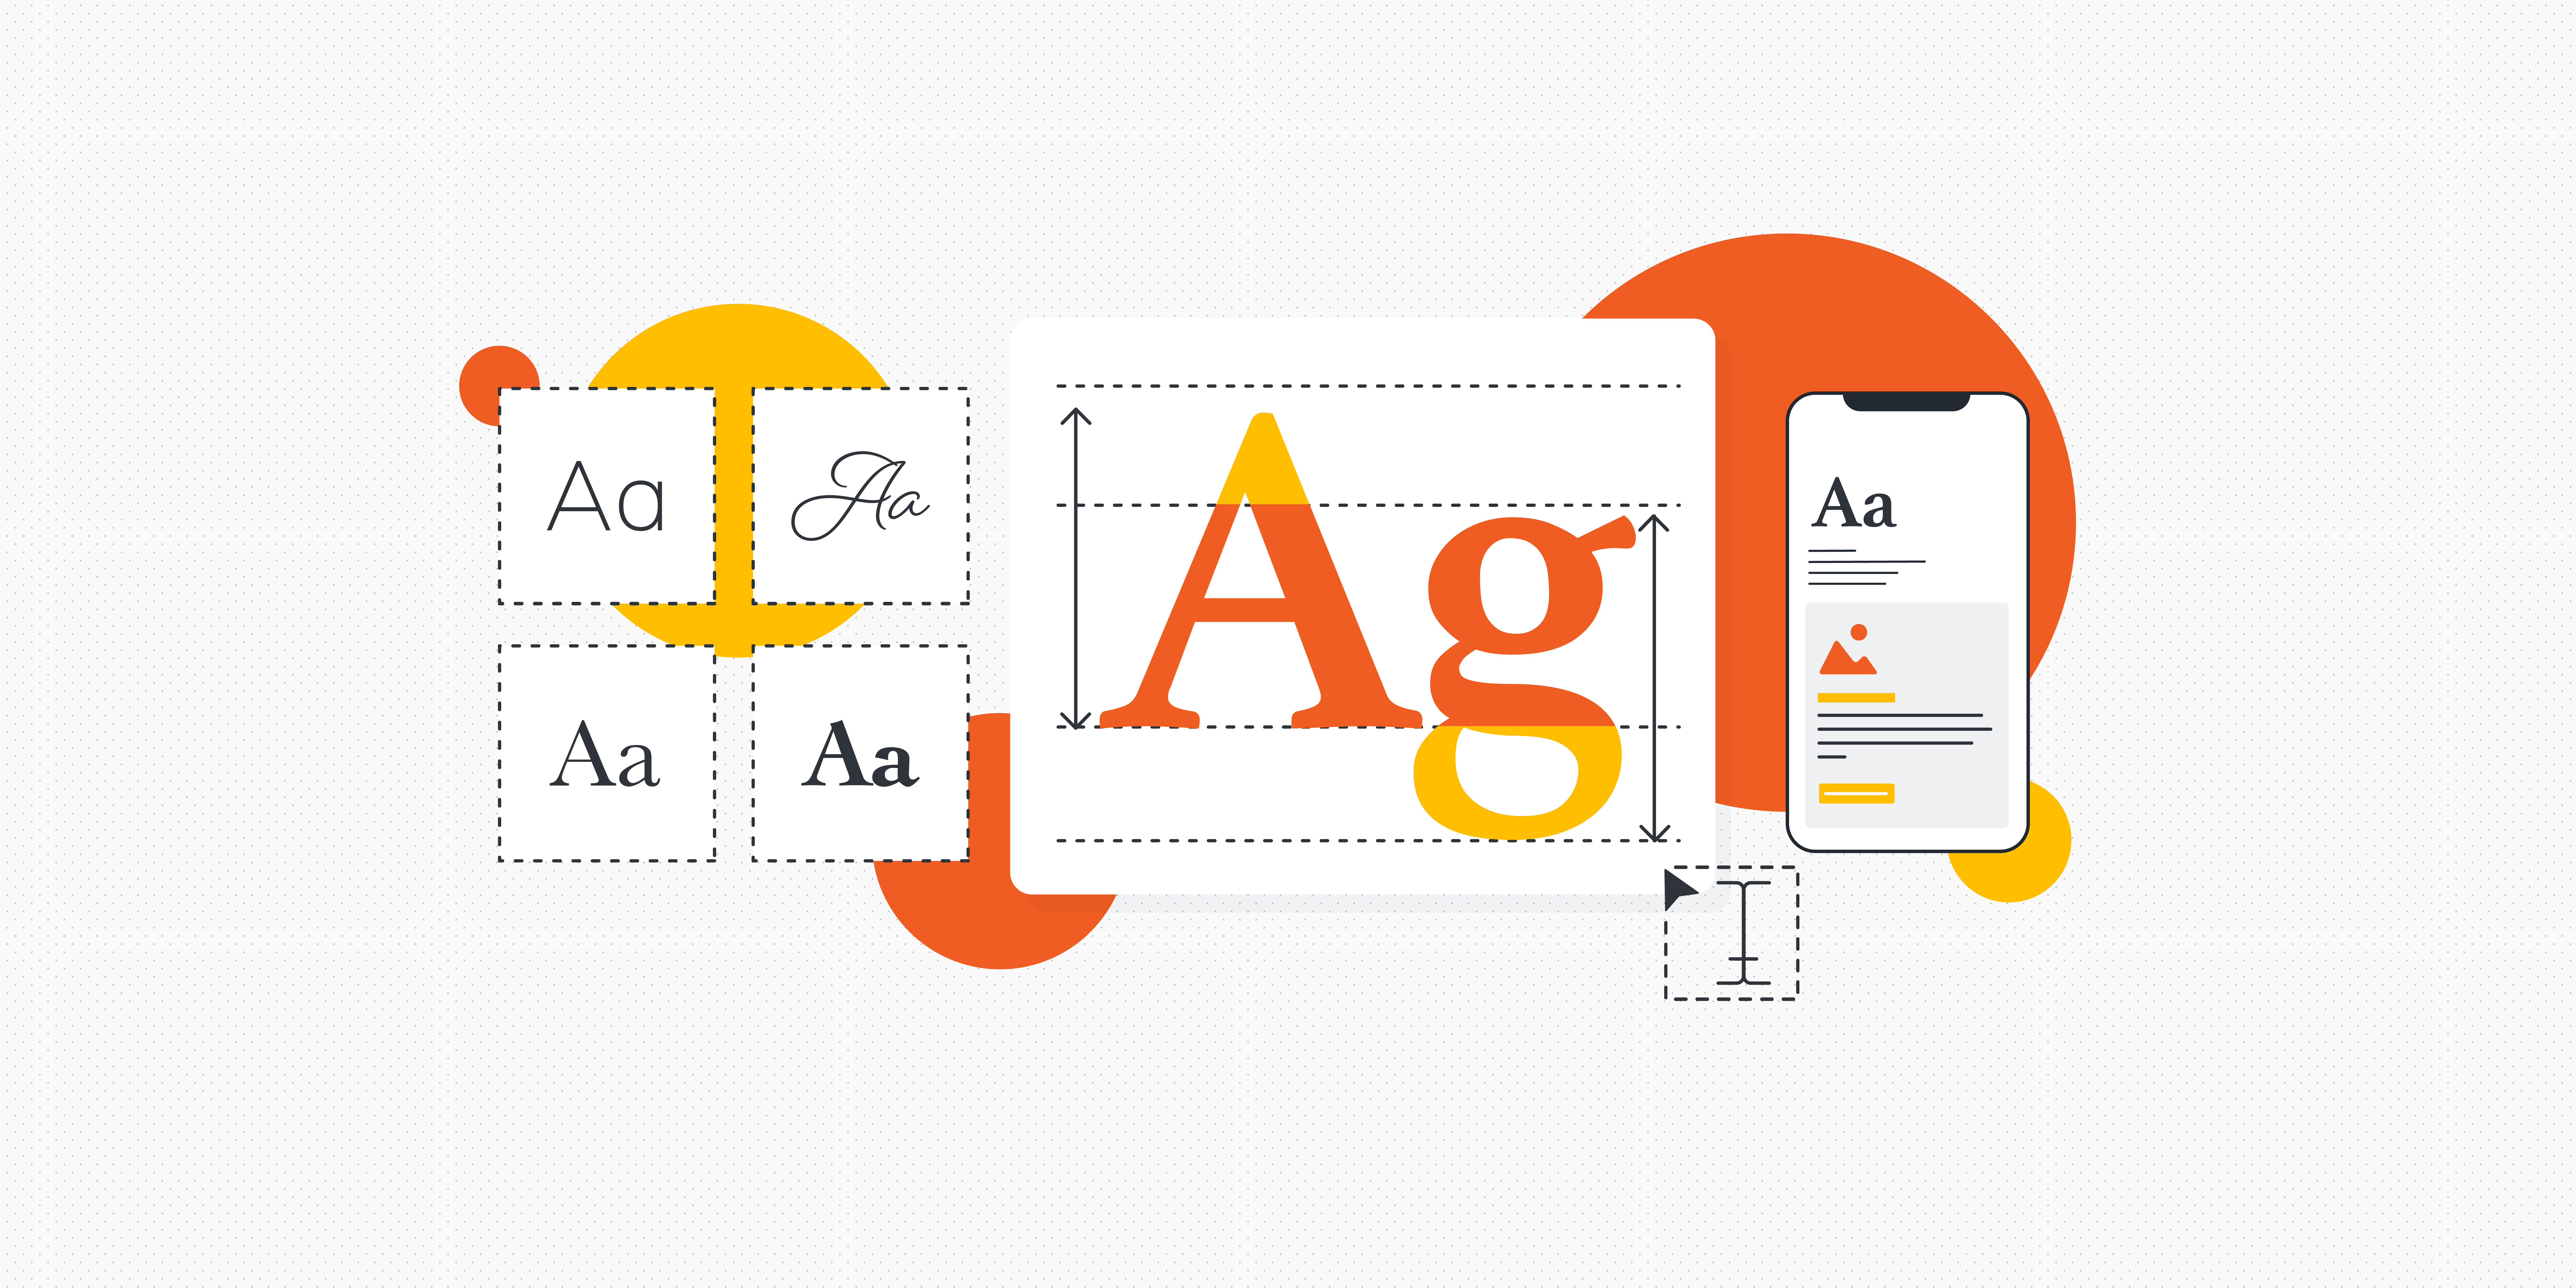 Illustration for the blog on beginner’s guide to typography design